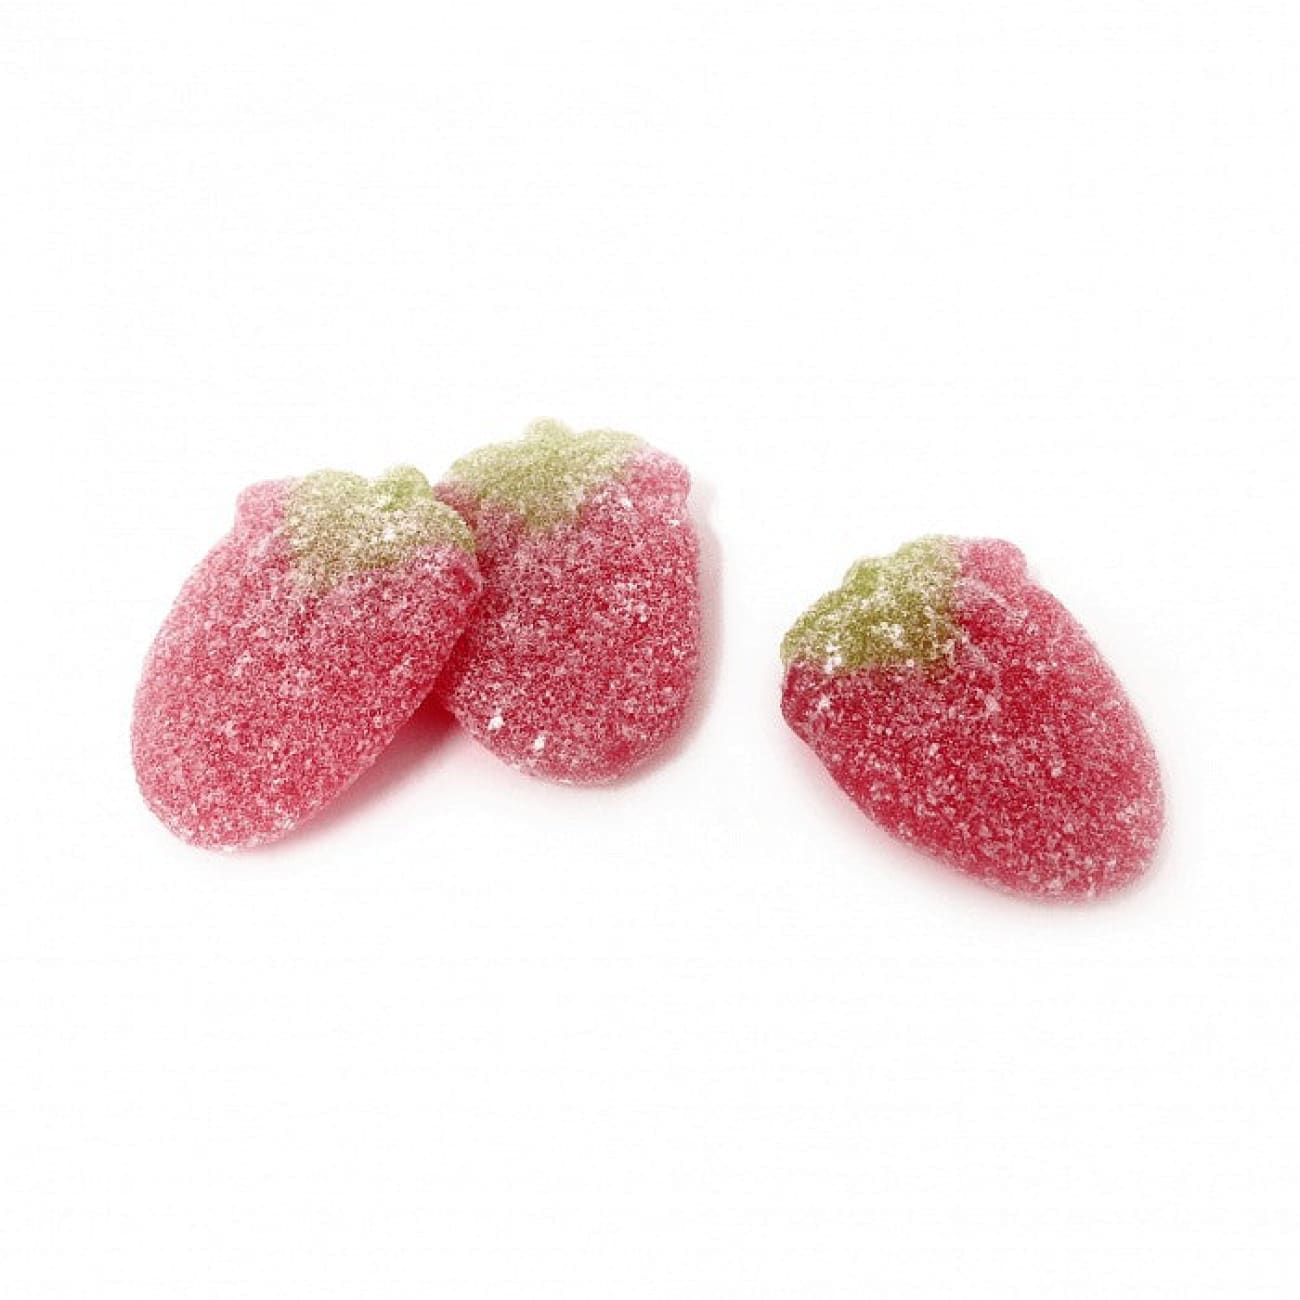 Vegan Fizzy Strawberries Sweets Rock Chocs 